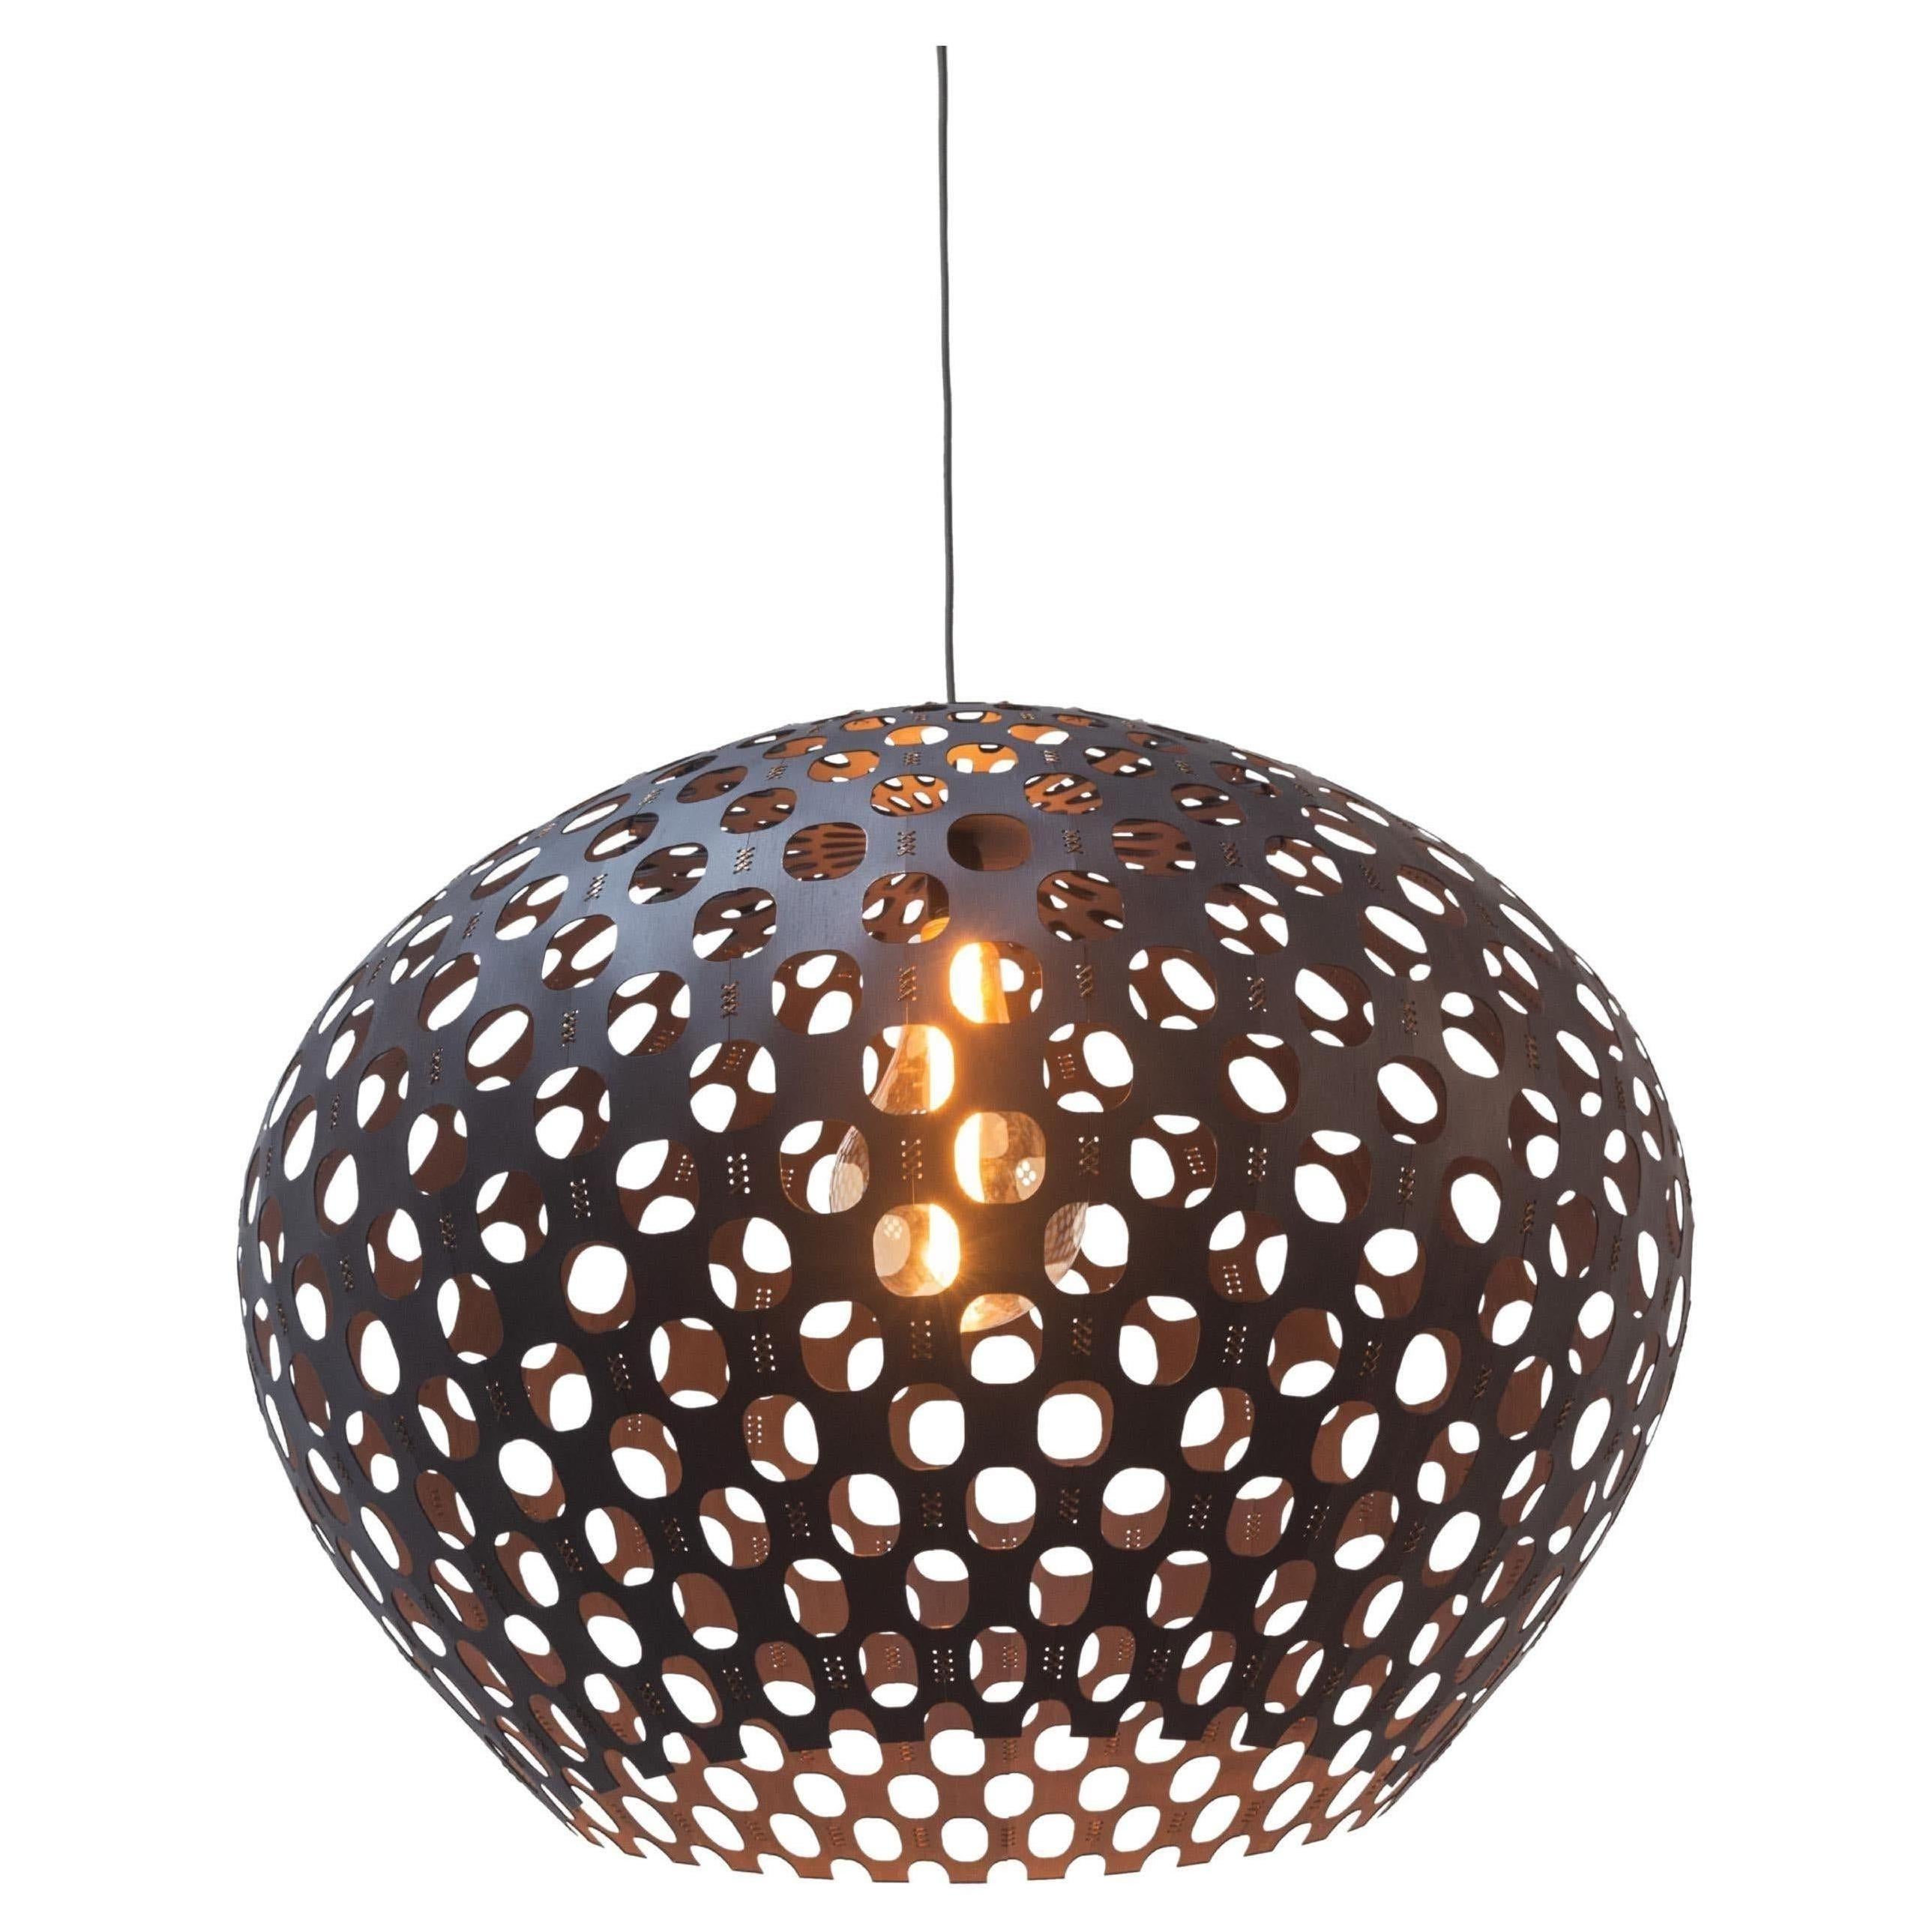 Panelitos Sphere Lamp Medium by Piegatto, une lampe sculpturale contemporaine